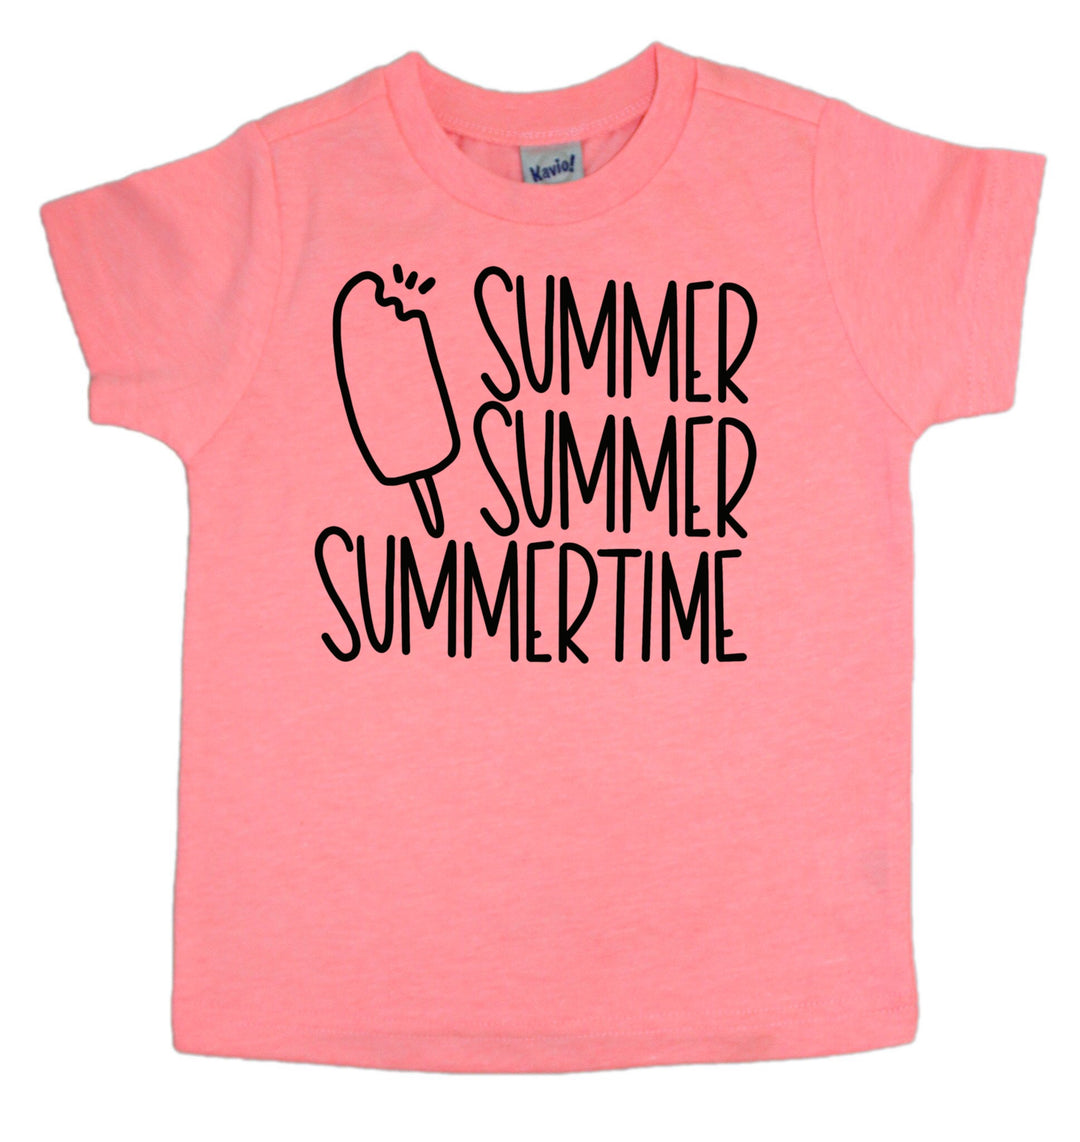 Flamingo pink summer summer summertime tee for toddlers. Shop mattieandmase.com